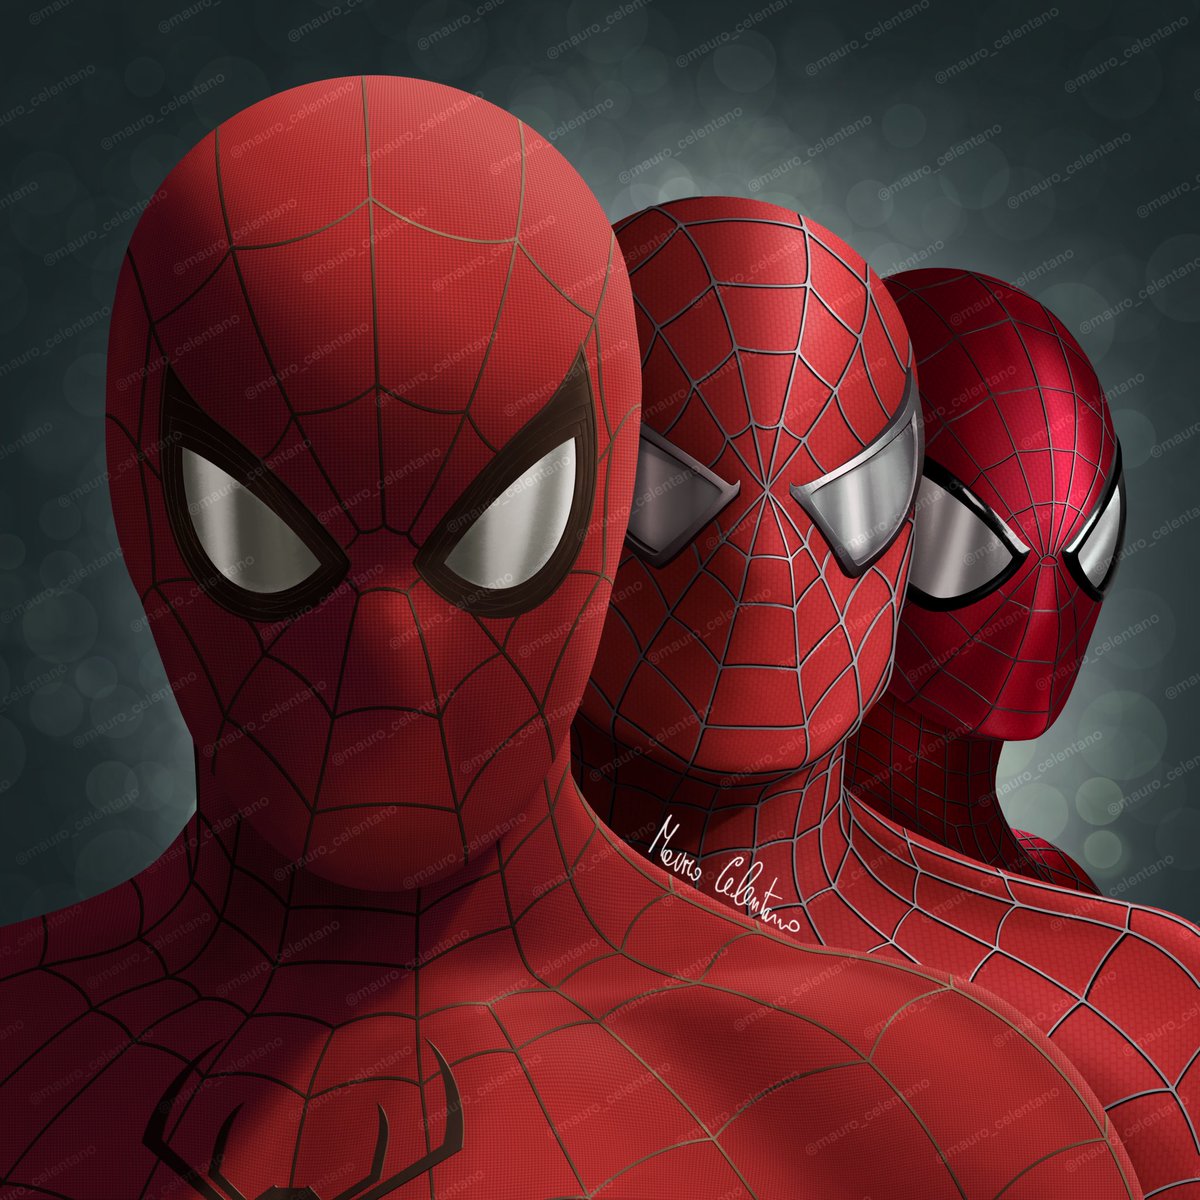 RT @Mauro_Celentano: Spider-Man No Way Home-Shattered Dimension #SpiderManNoWayHome #MakeTASM3 #MakeRaimiSpiderMan4 https://t.co/k689KpyIH0